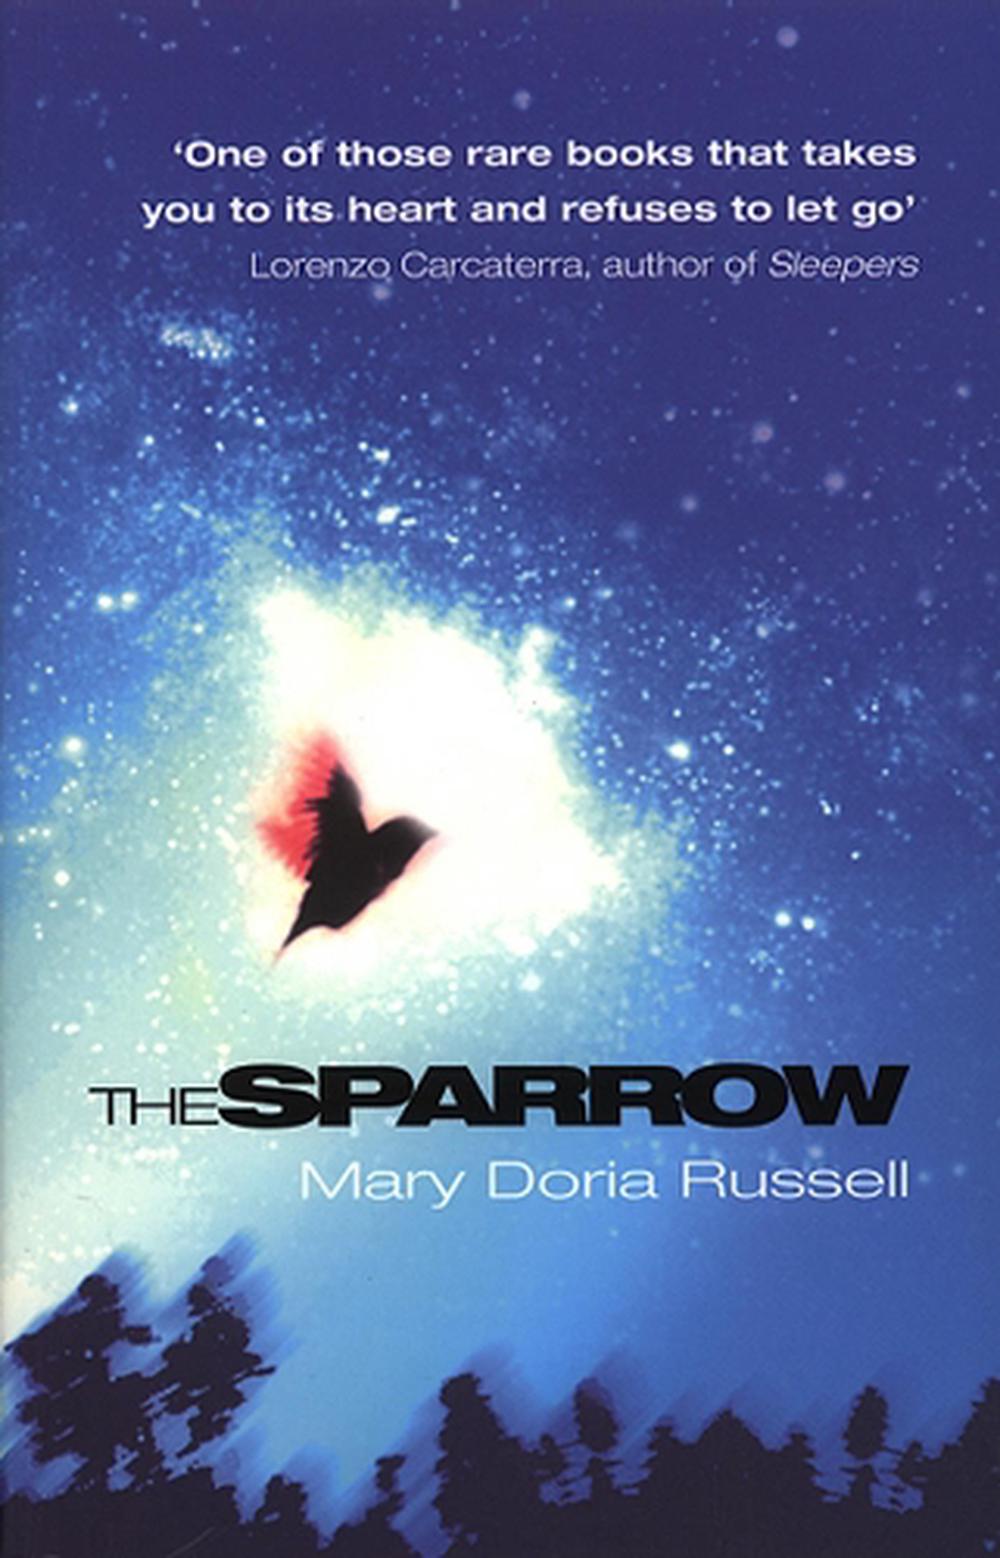 the sparrow mary doria russell movie